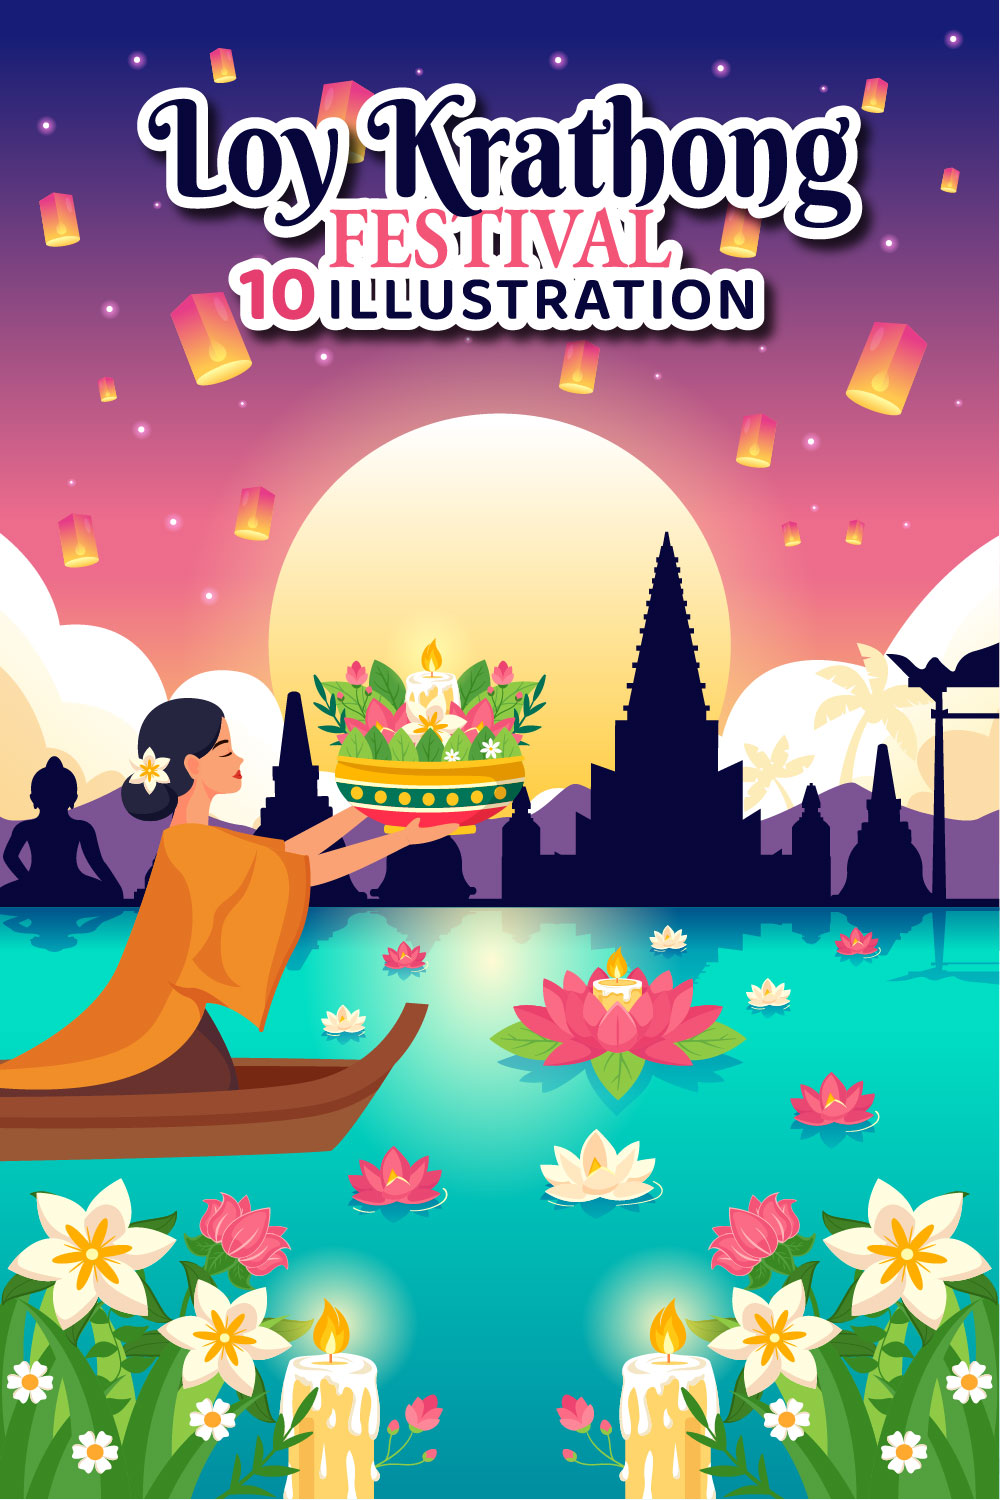 10 Loy Krathong Festival Illustration pinterest preview image.